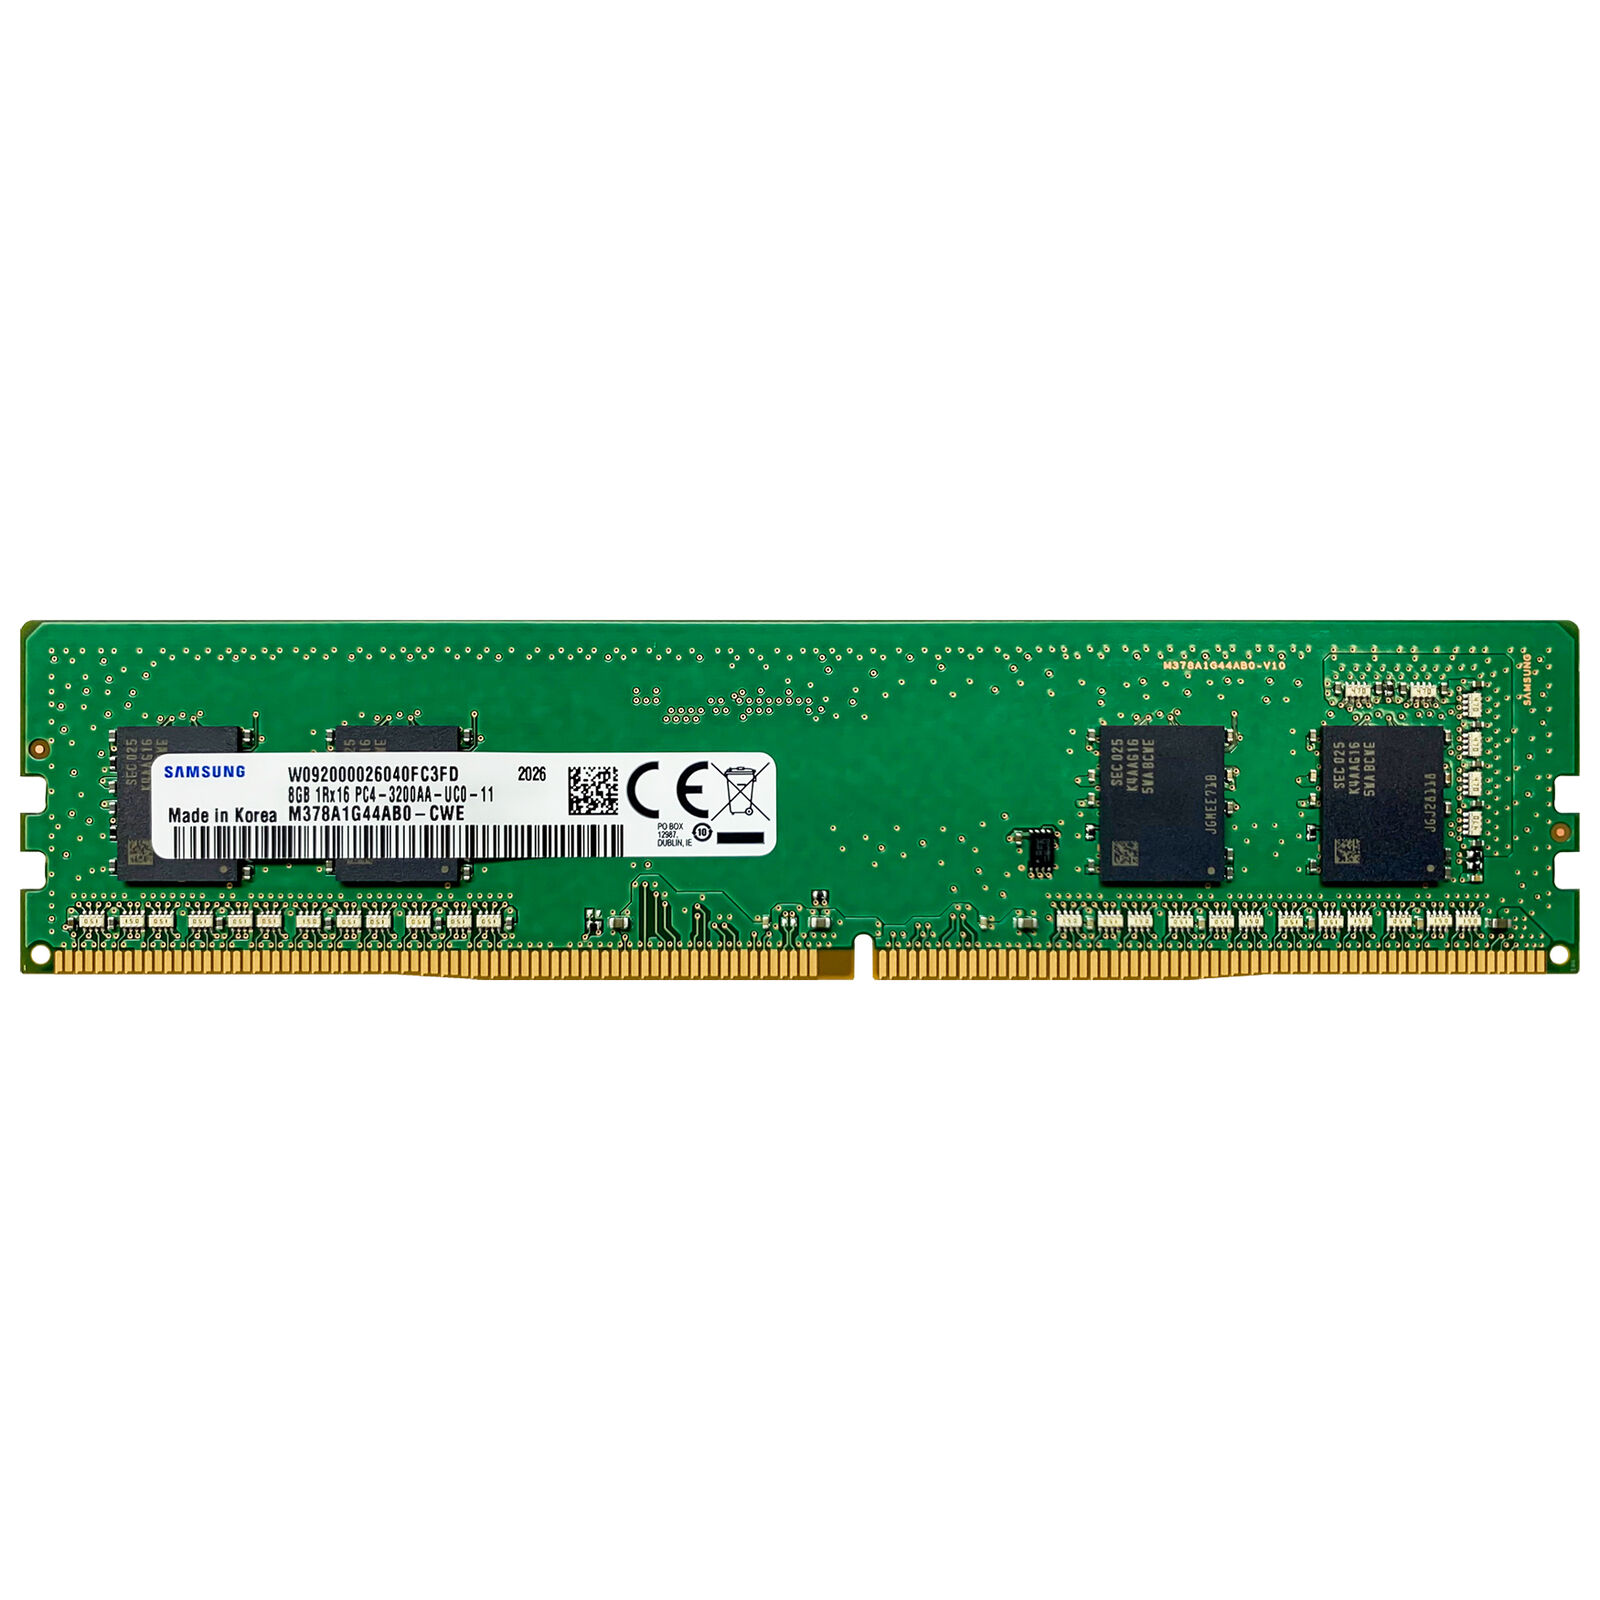 Samsung 8GB DDR4 3200 MHz PC4-25600 DIMM Desktop Memory RAM (M378A1G44AB0-CWE)